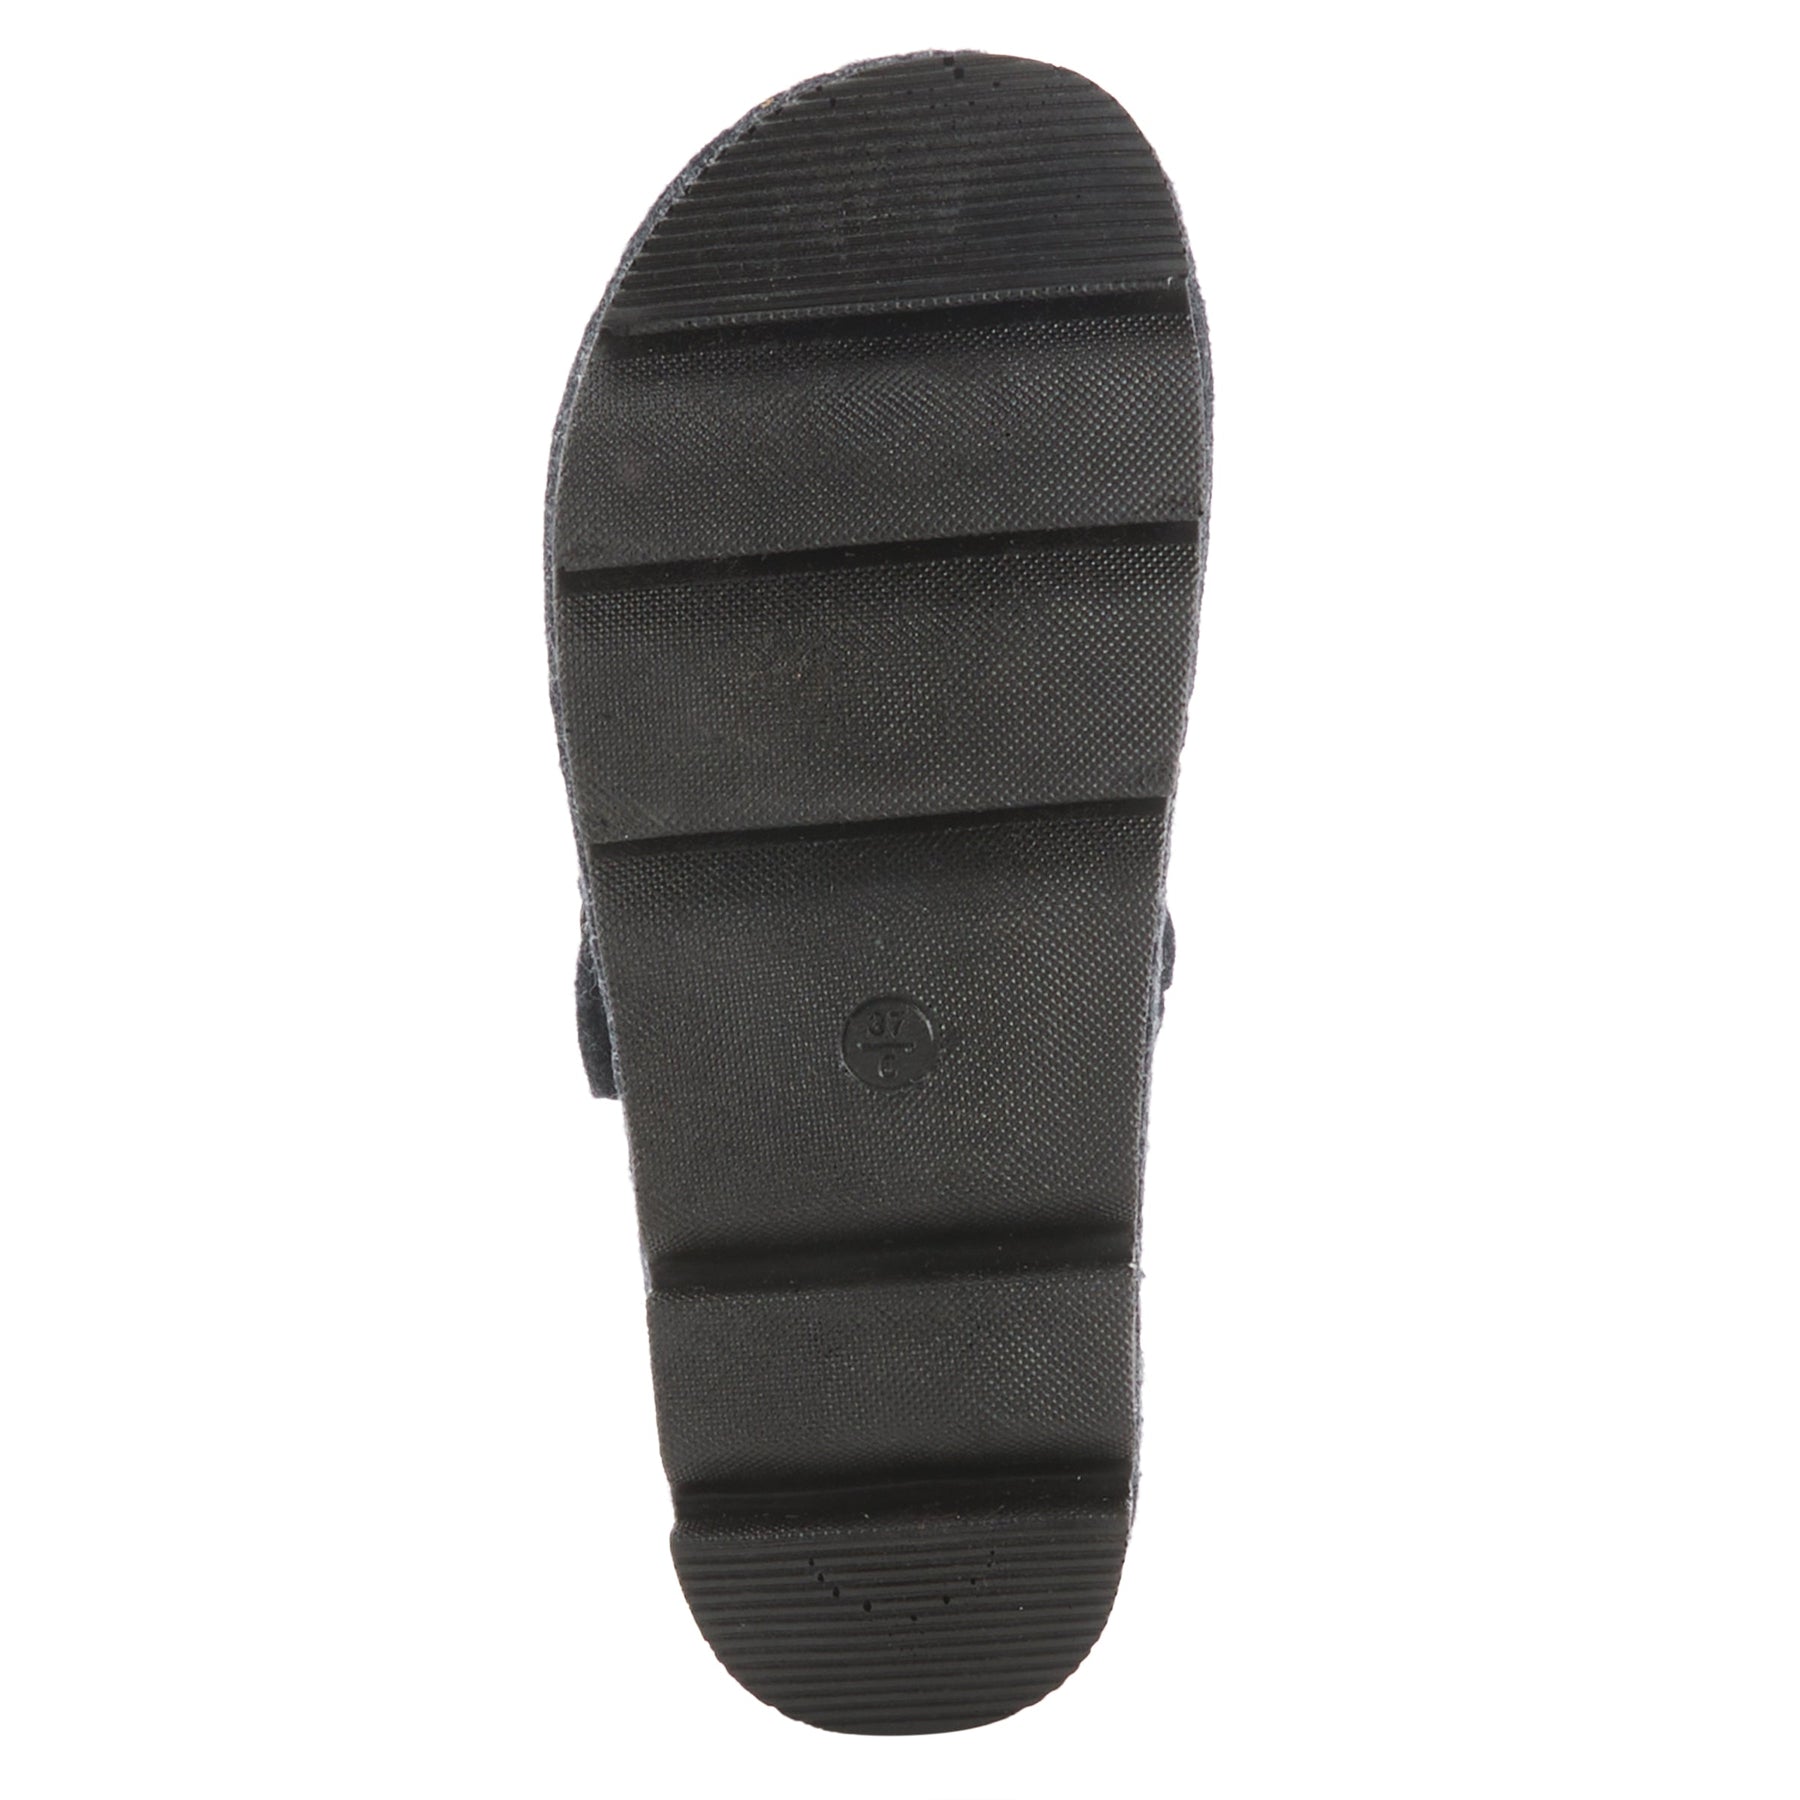 Flexus Clogger Platform Clog: Comfortable Shoes - Spring Step Shoe ...